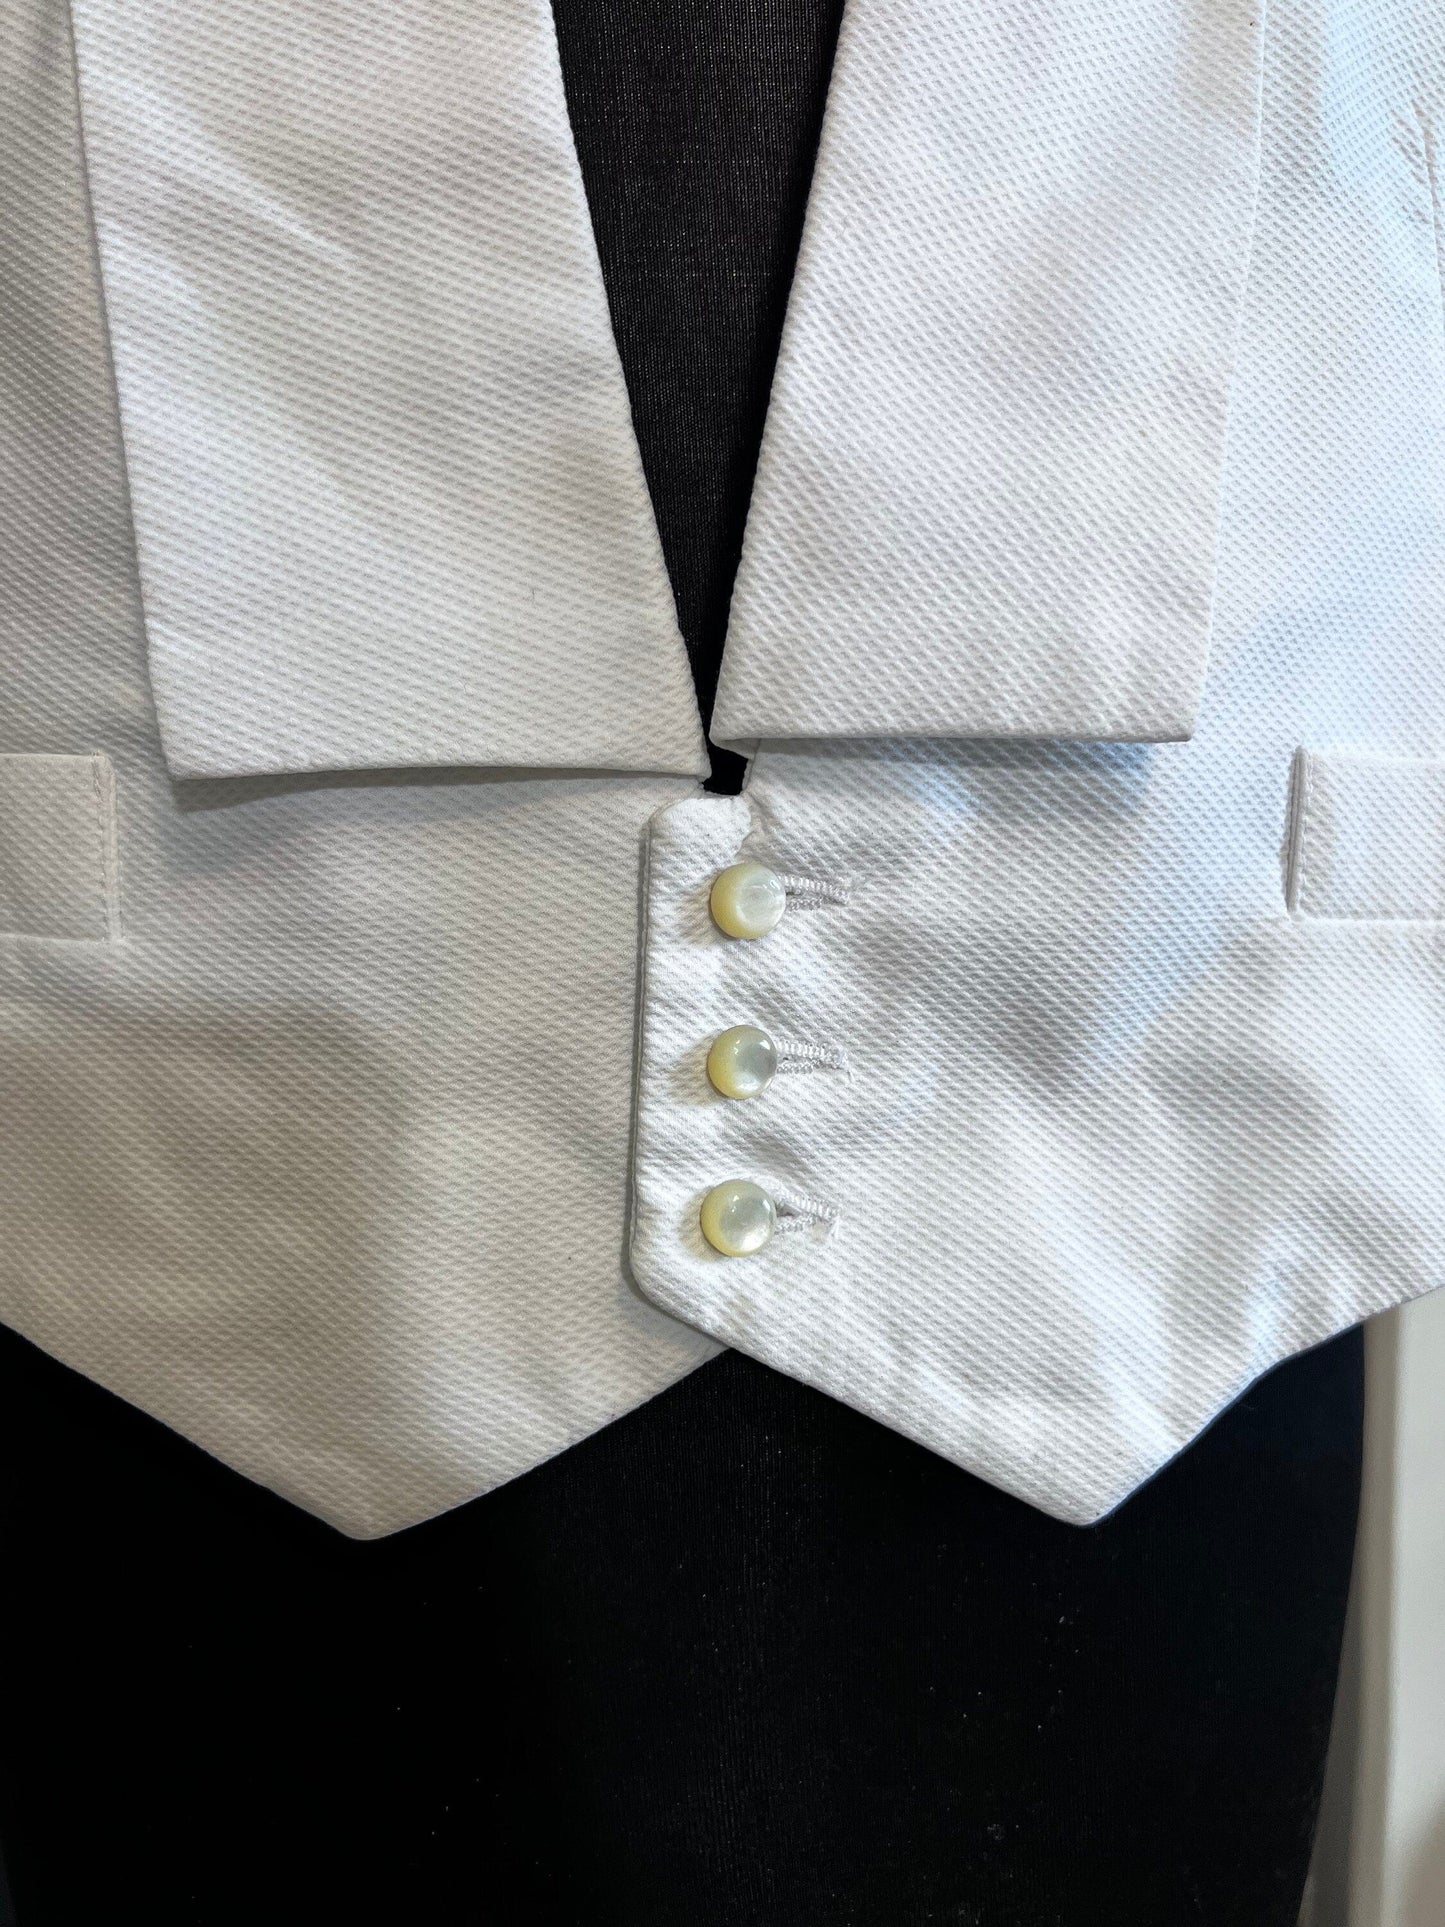 Vintage Mens White Tuxedo Waistcoat White , Suit Vest White Tie, Mens White Waffle Front Backless Tuxedo Suit Vest, back strap missing